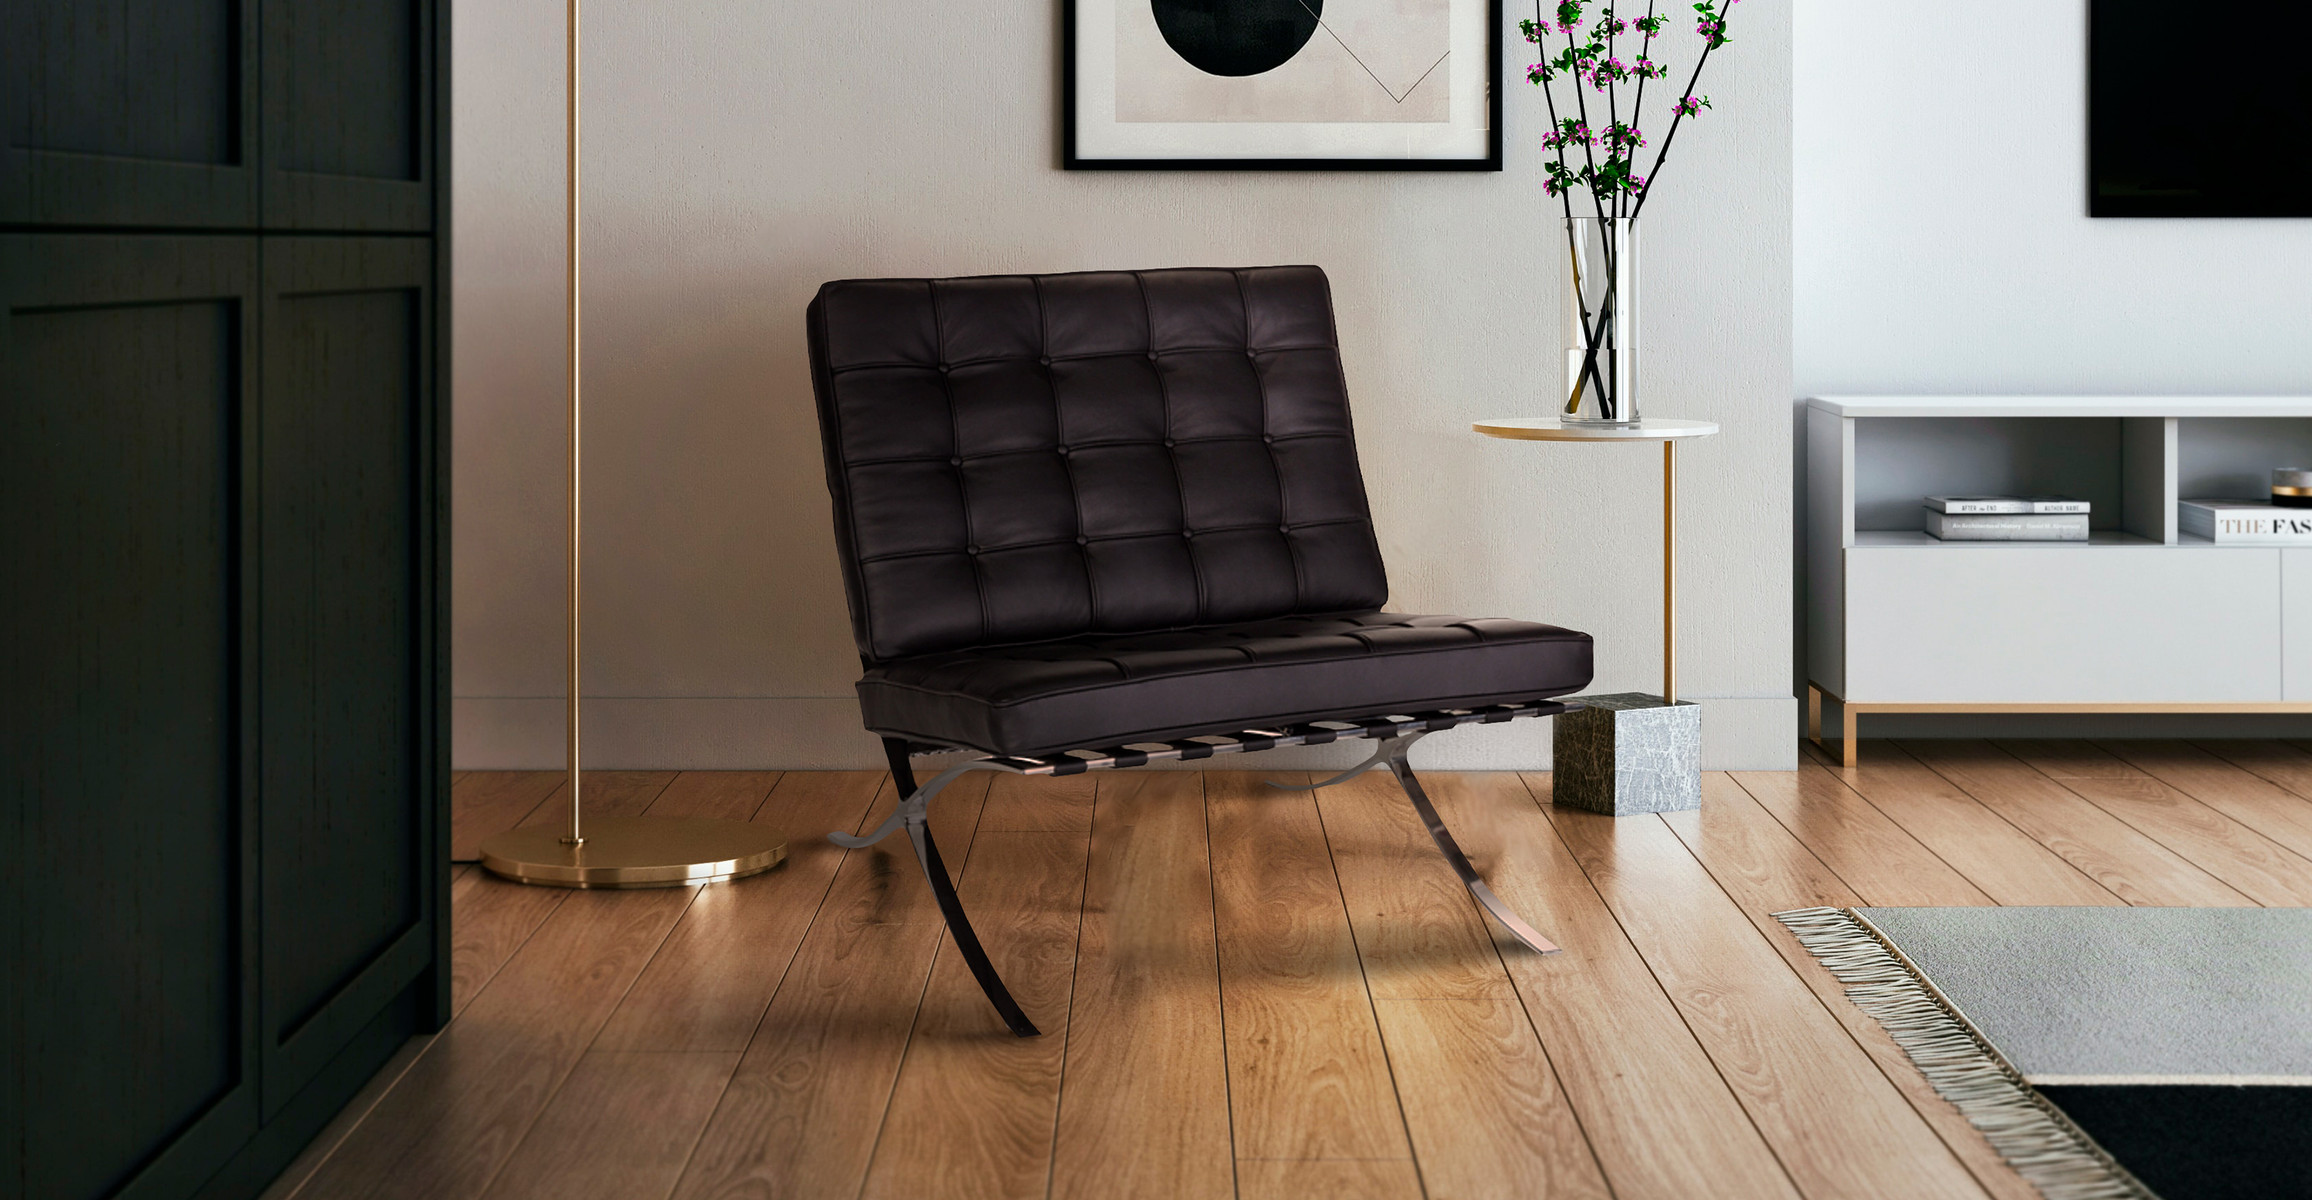 Barcelona Chair at Manhattan Home Design